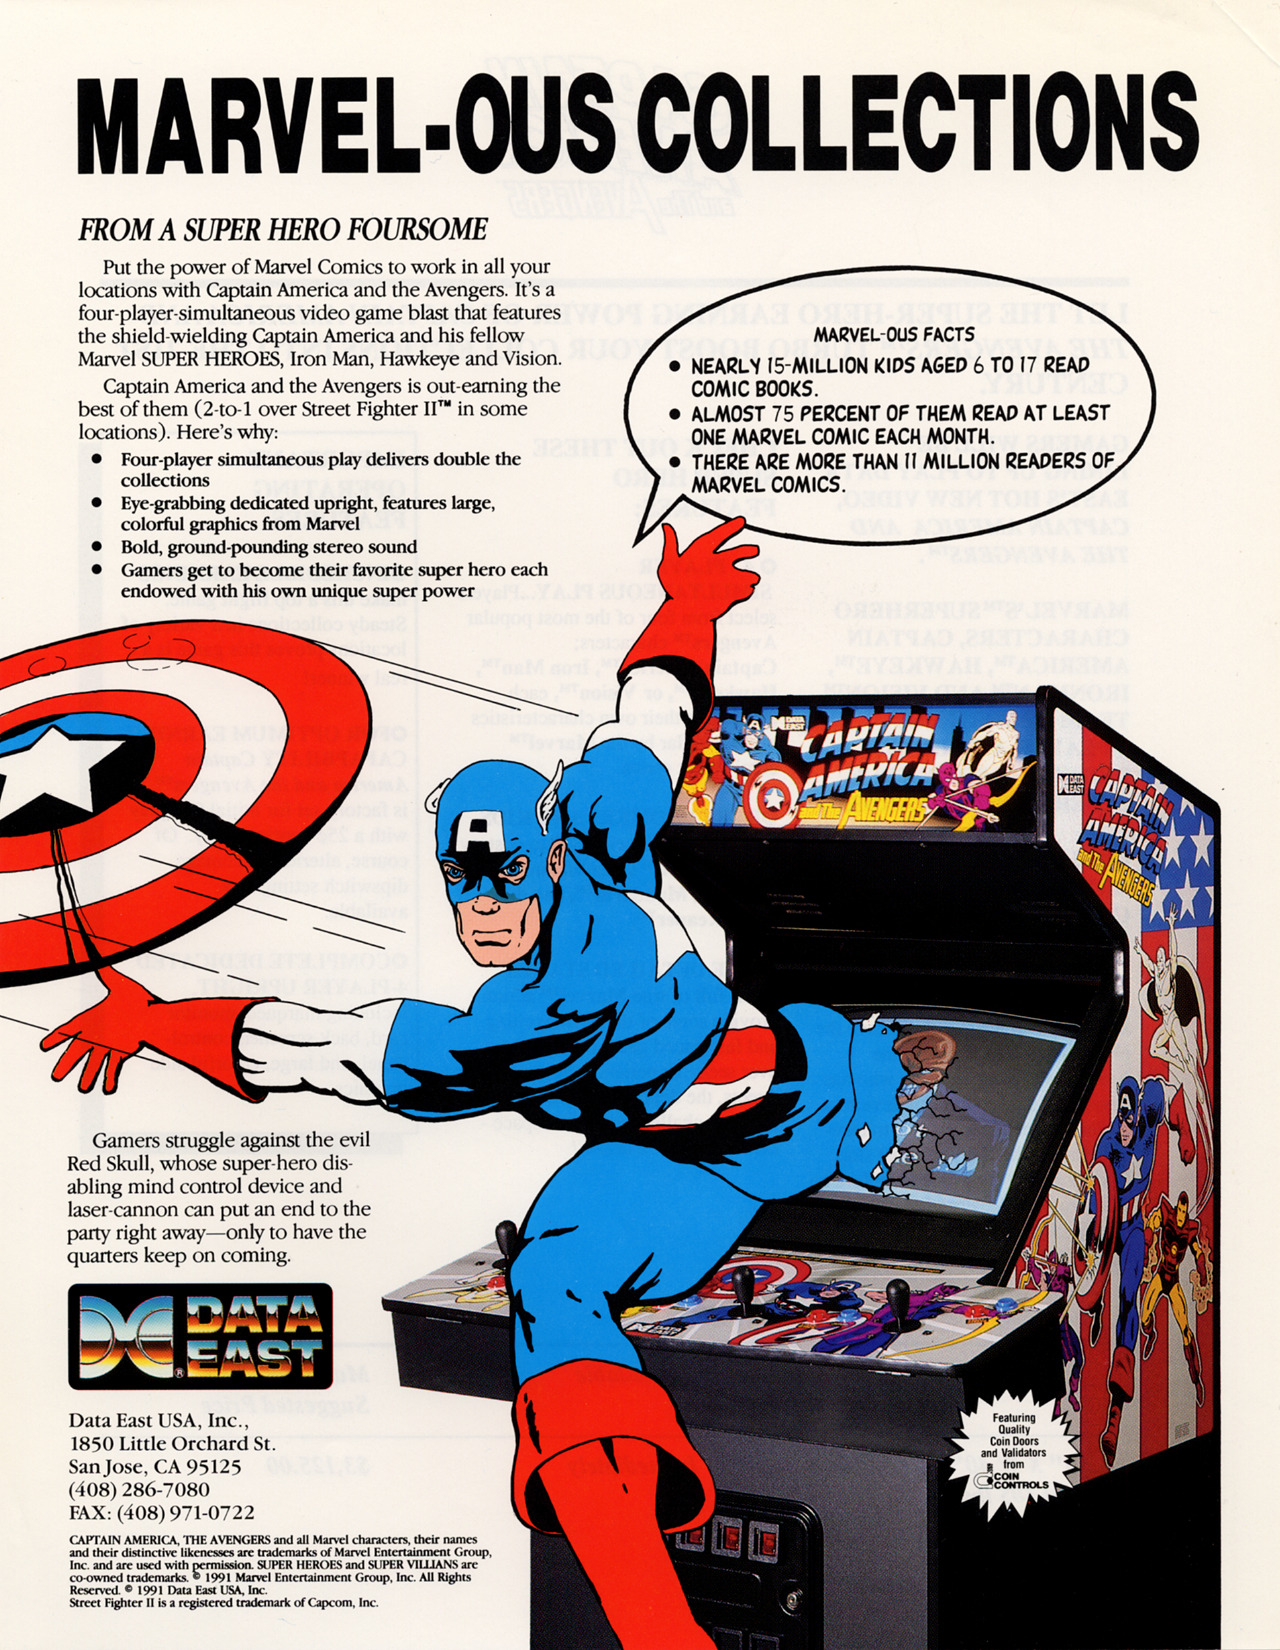 Gamer struggles nsfw. Капитан Америка NES. Captain America and the Avengers NES. Captain America and the Avengers Arcade. Captain America and the Avengers mame.